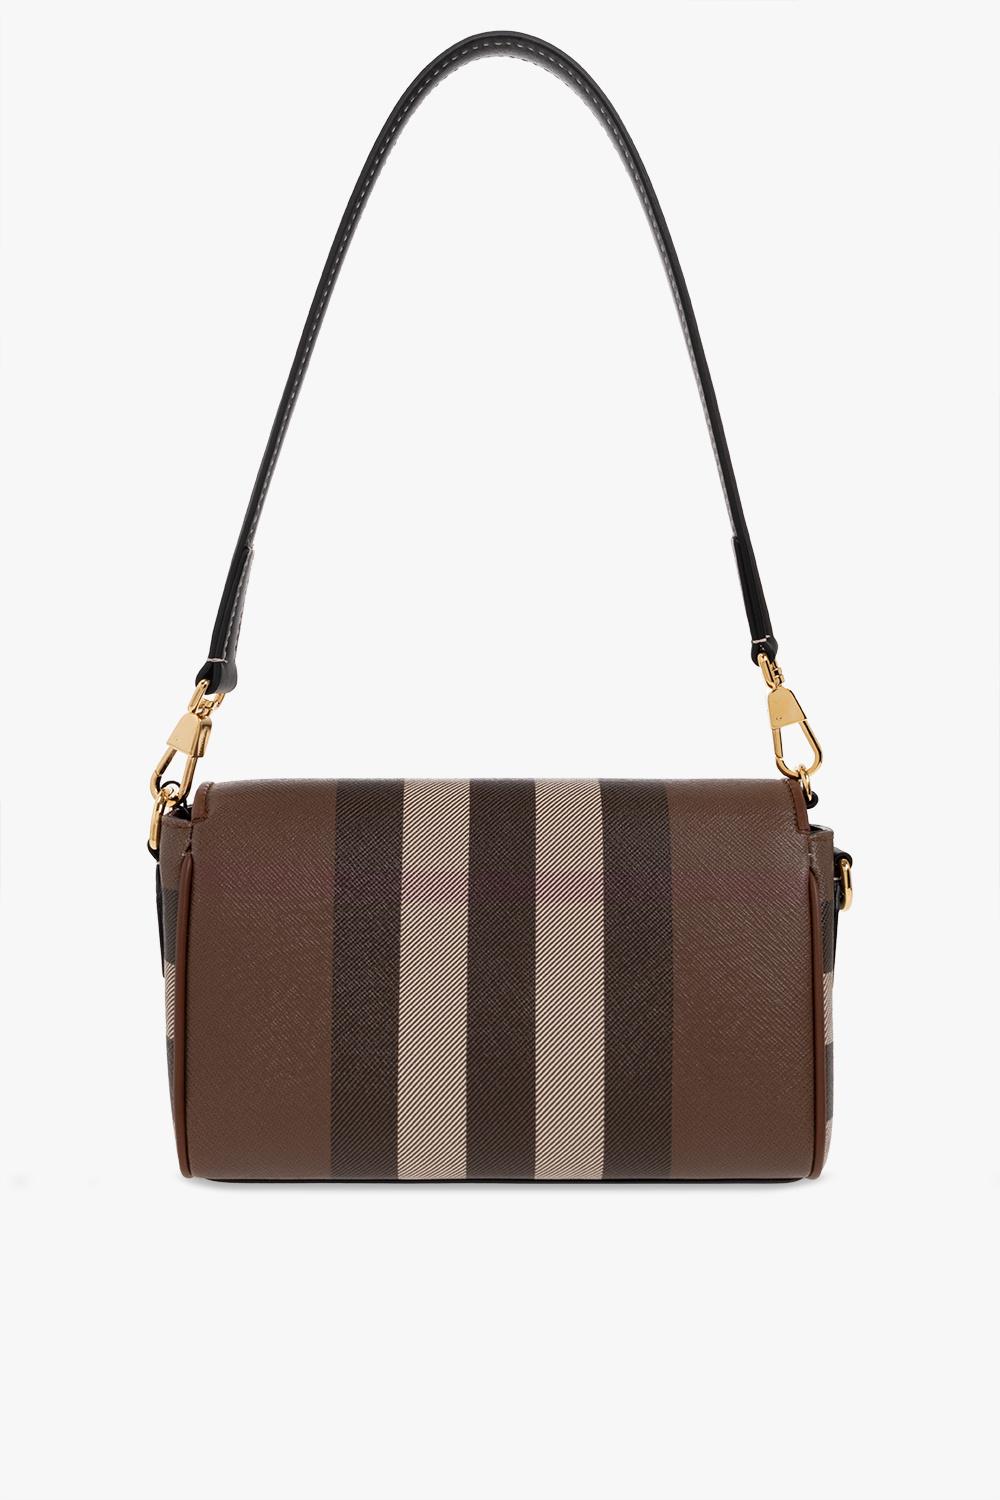 Burberry 'dorset' Shoulder Bag in Brown | Lyst